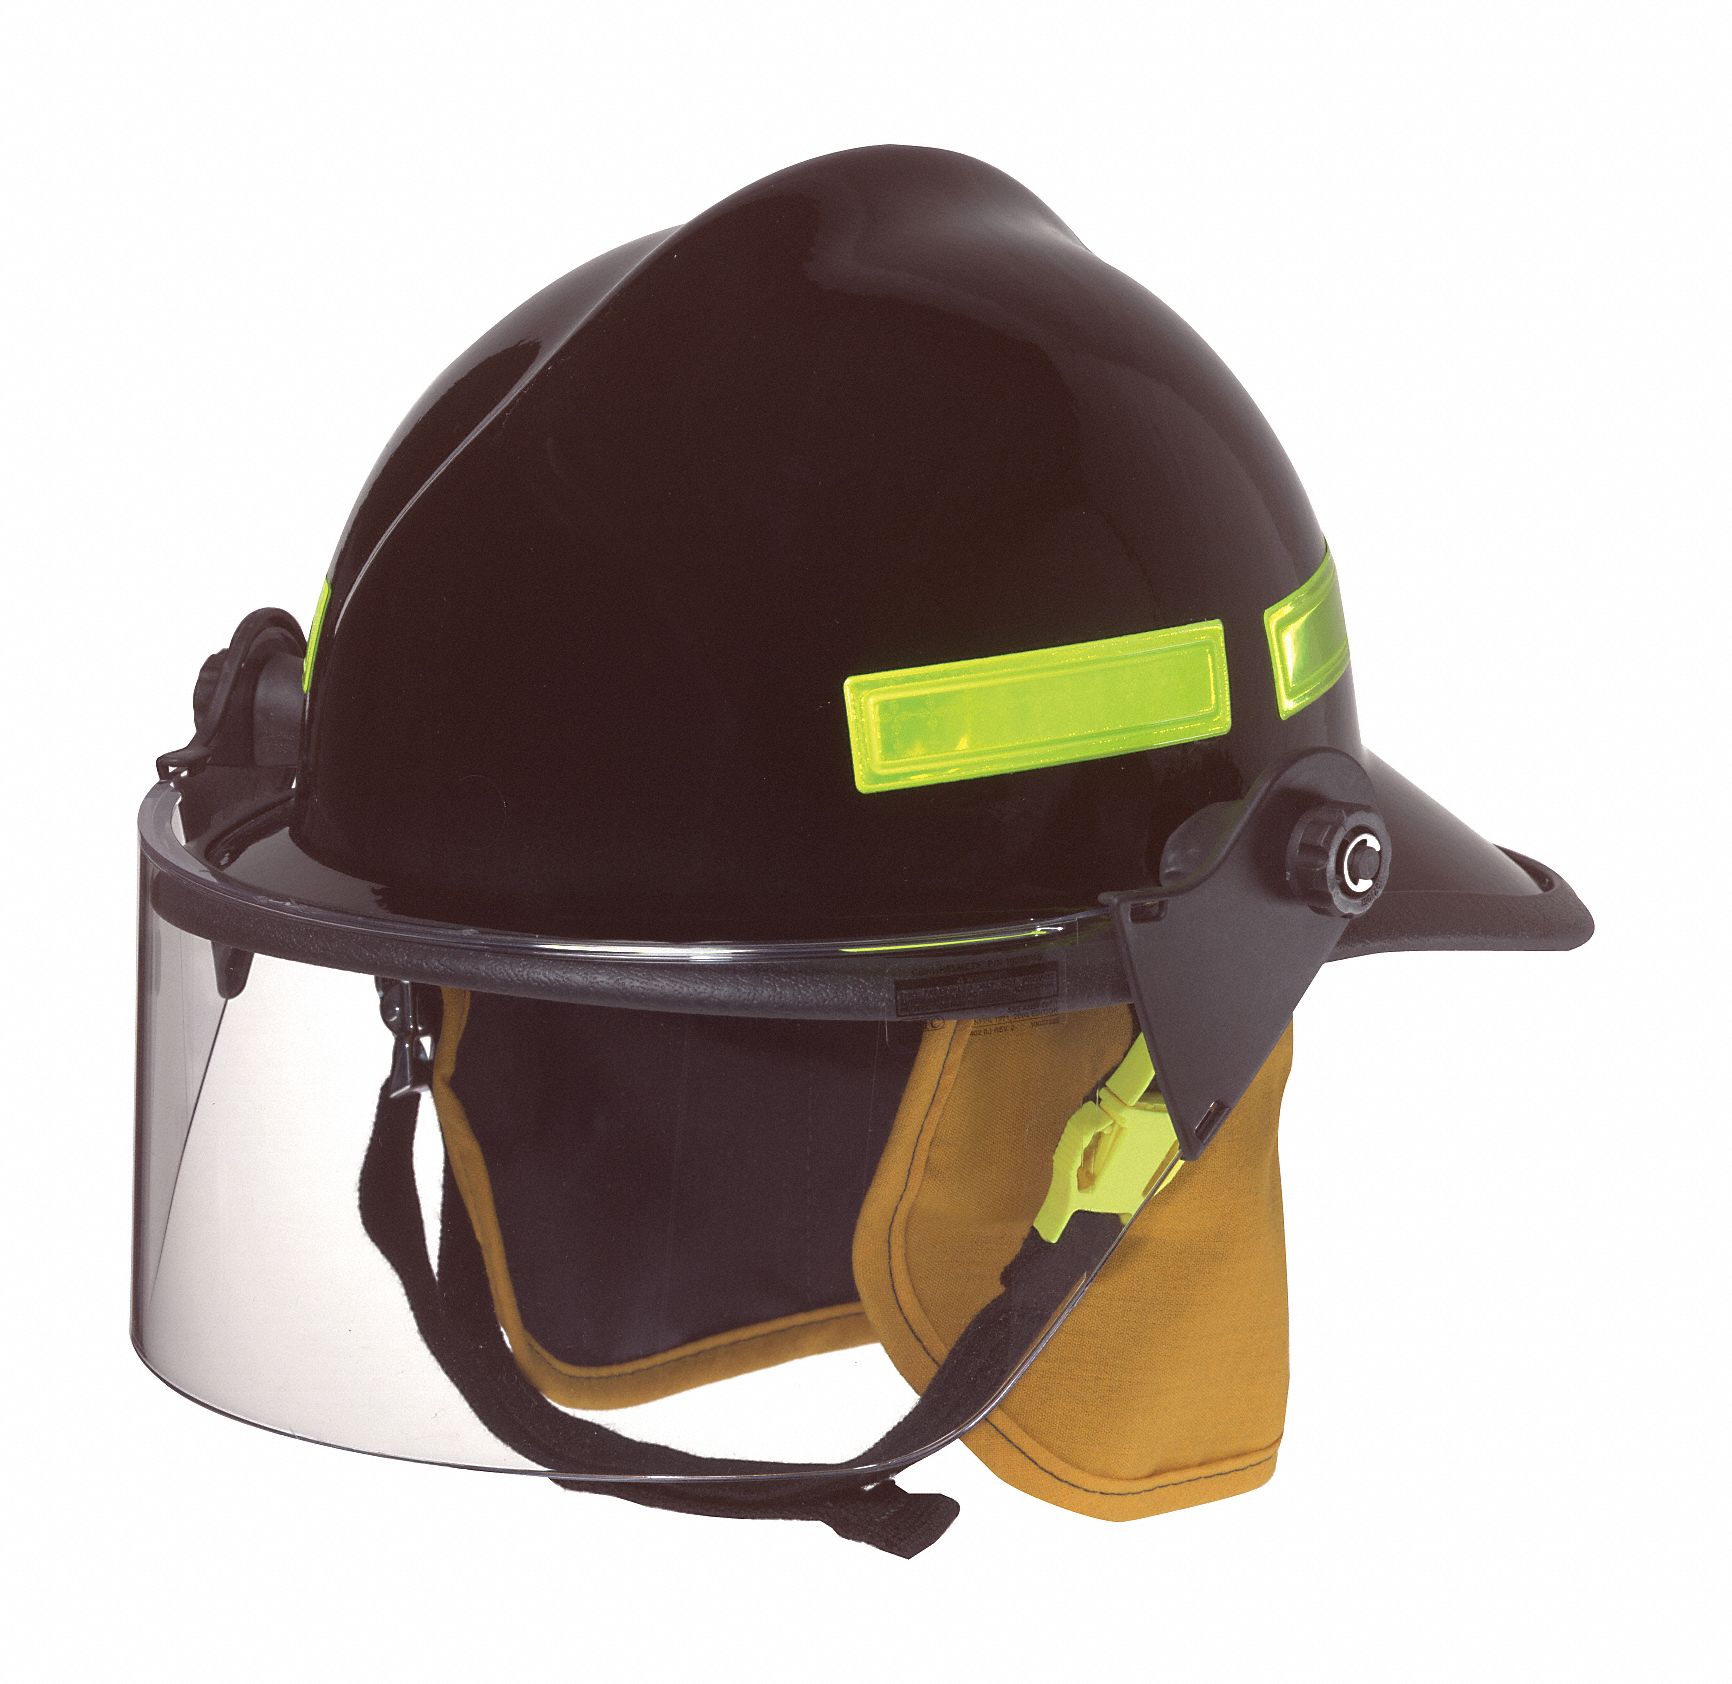 White Fire Helmet, Shell Material: Fiberglass, Ratchet Suspension, Fits Hat Size: 6-3/8 to 8-3/8